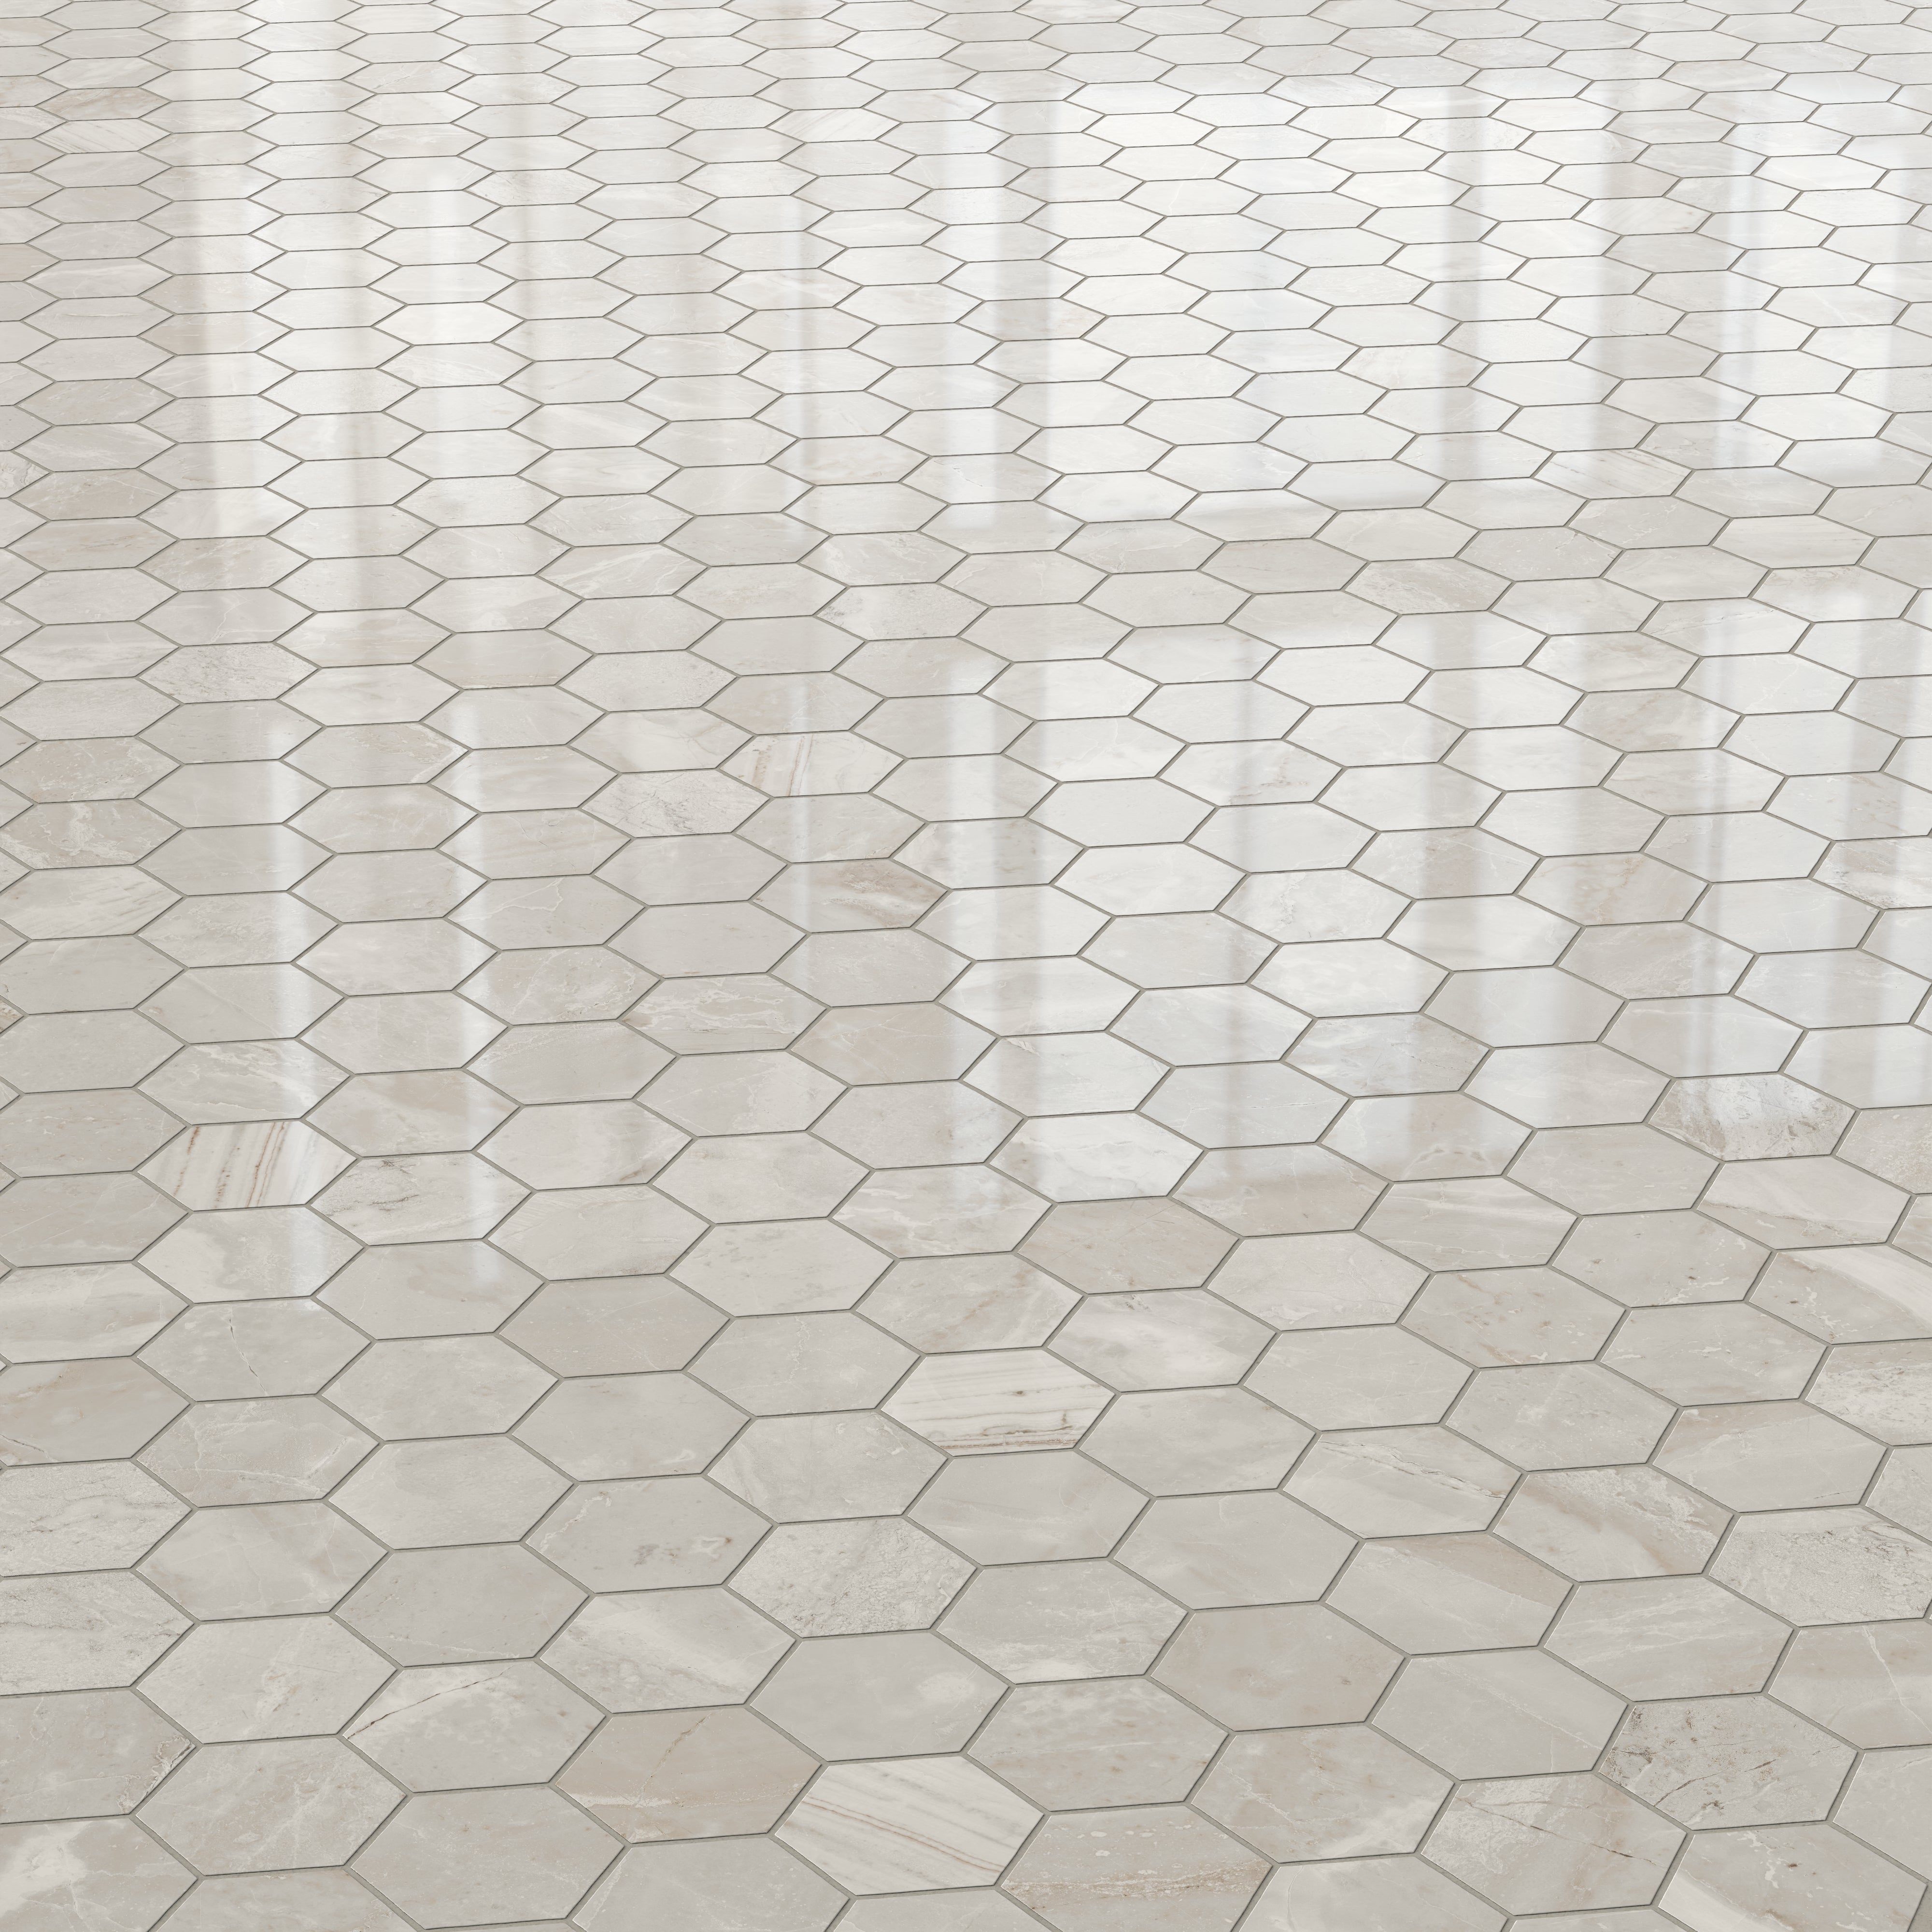 Blair 3x3 Polished Porcelain Hexagon Mosaic Tile in Oniciata Beige